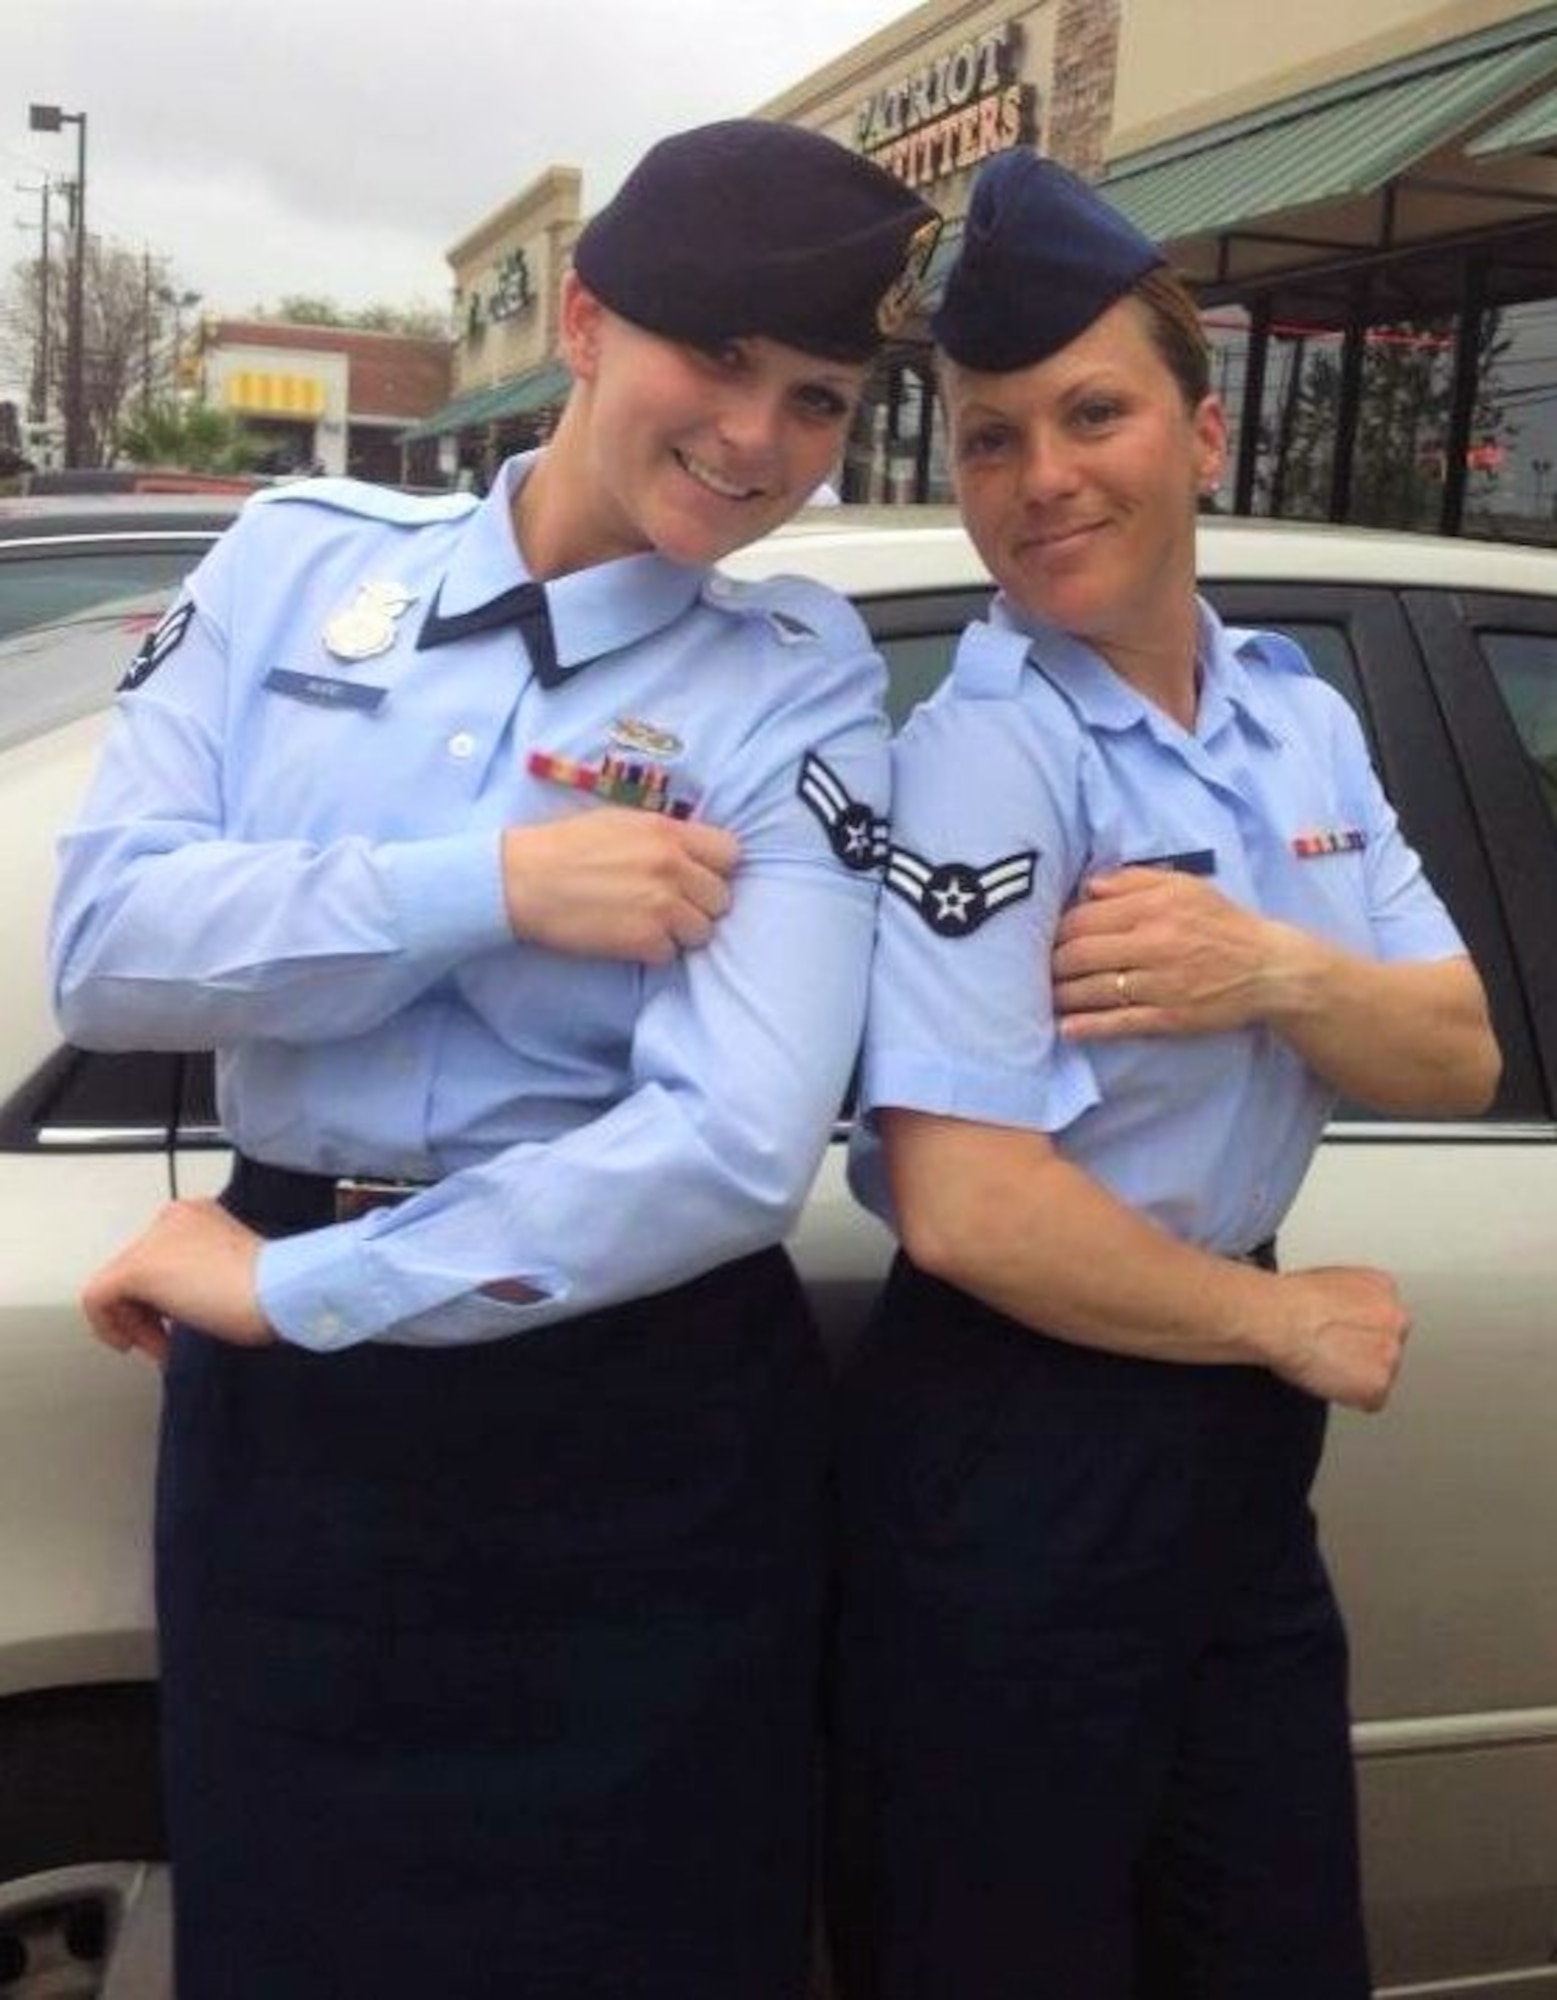 Courtesy photo
Left, Staff Sgt. Amanda Robbins, right, Staff Sgt. Rebecca Ward